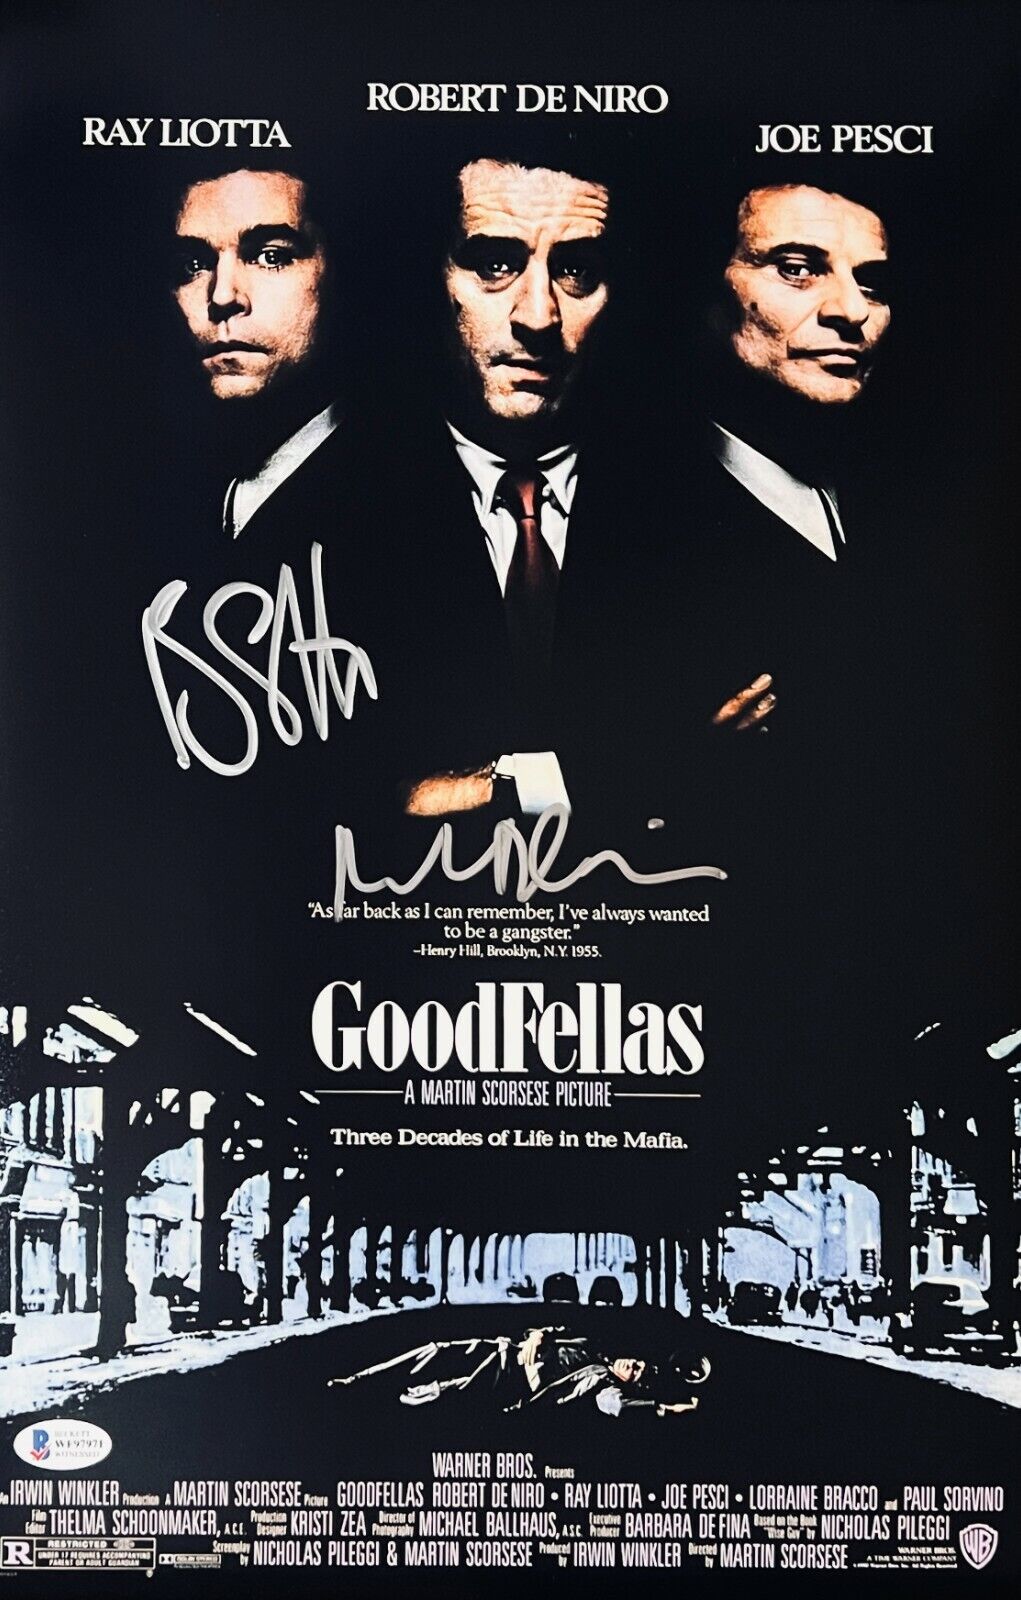 Ray Liotta Robert De Niro Signed 11x17 Goodfellas Poster Photo Beckett Witnessed